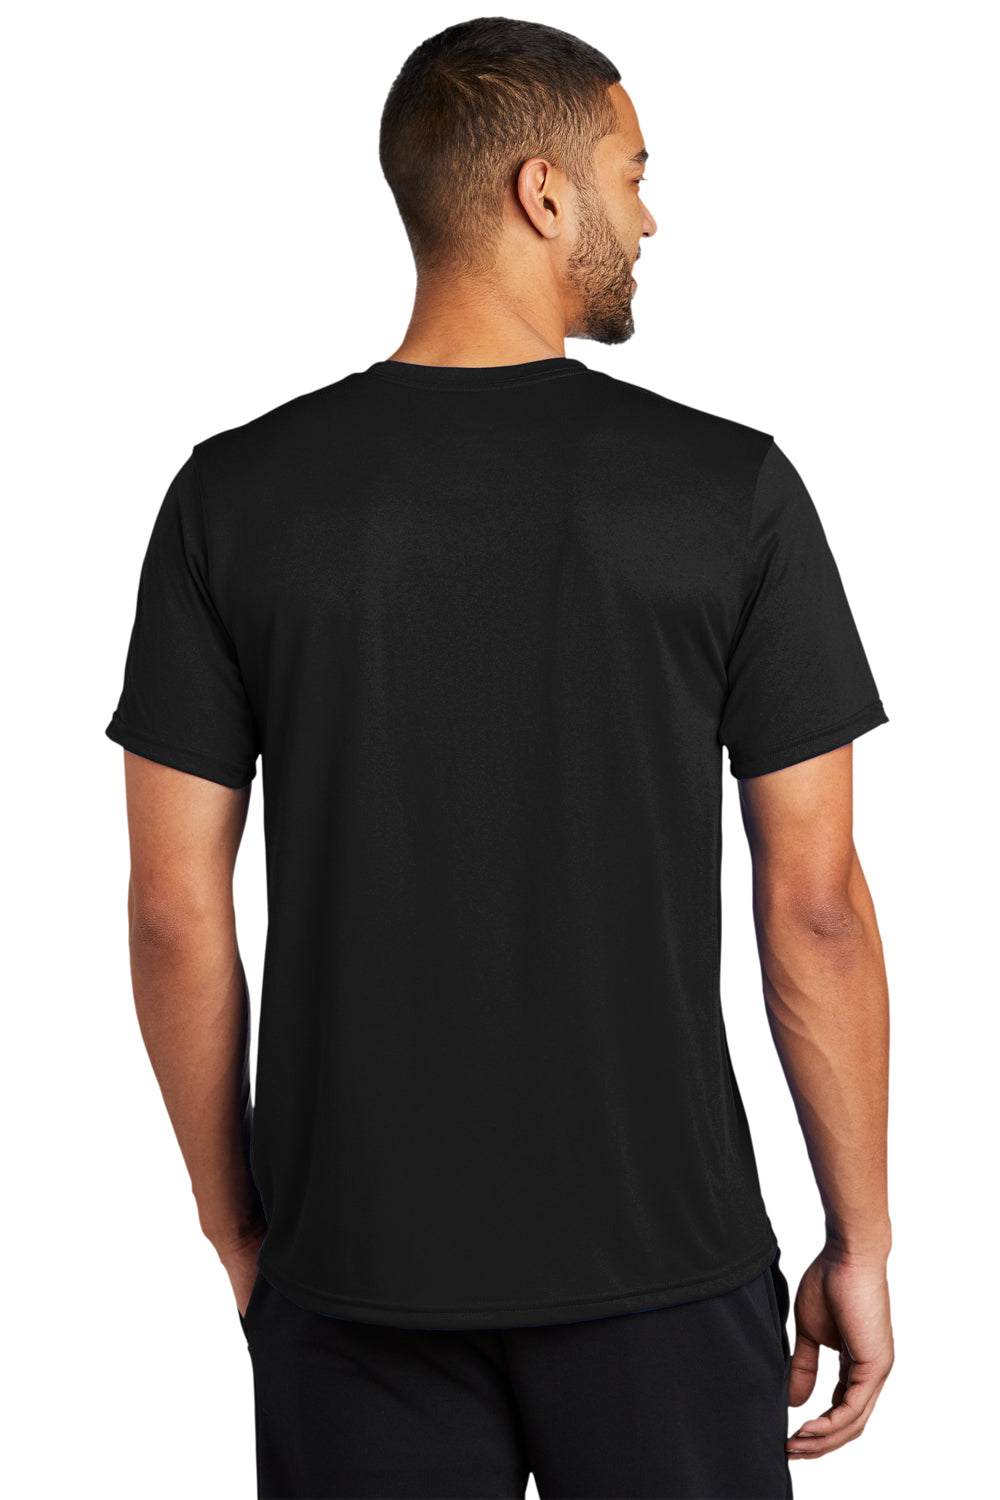 Nike 727982 Mens Legend Dri-Fit Moisture Wicking Short Sleeve Crewneck T-Shirt Black Model Back